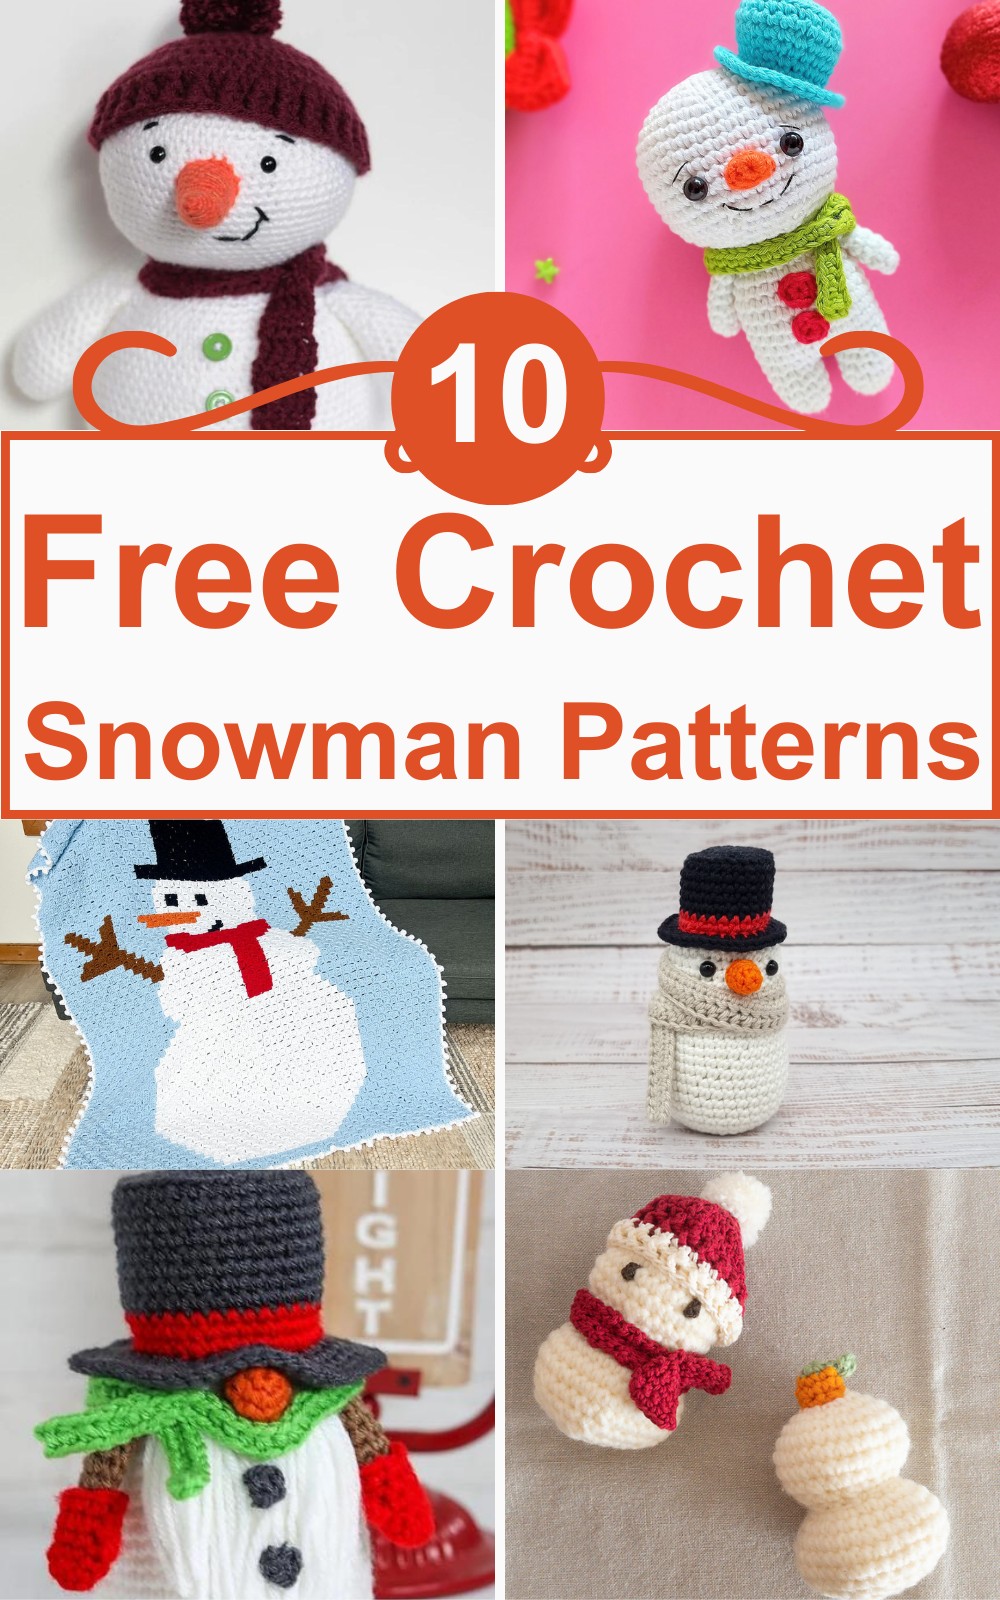 4 Free Crochet Snowman Patterns